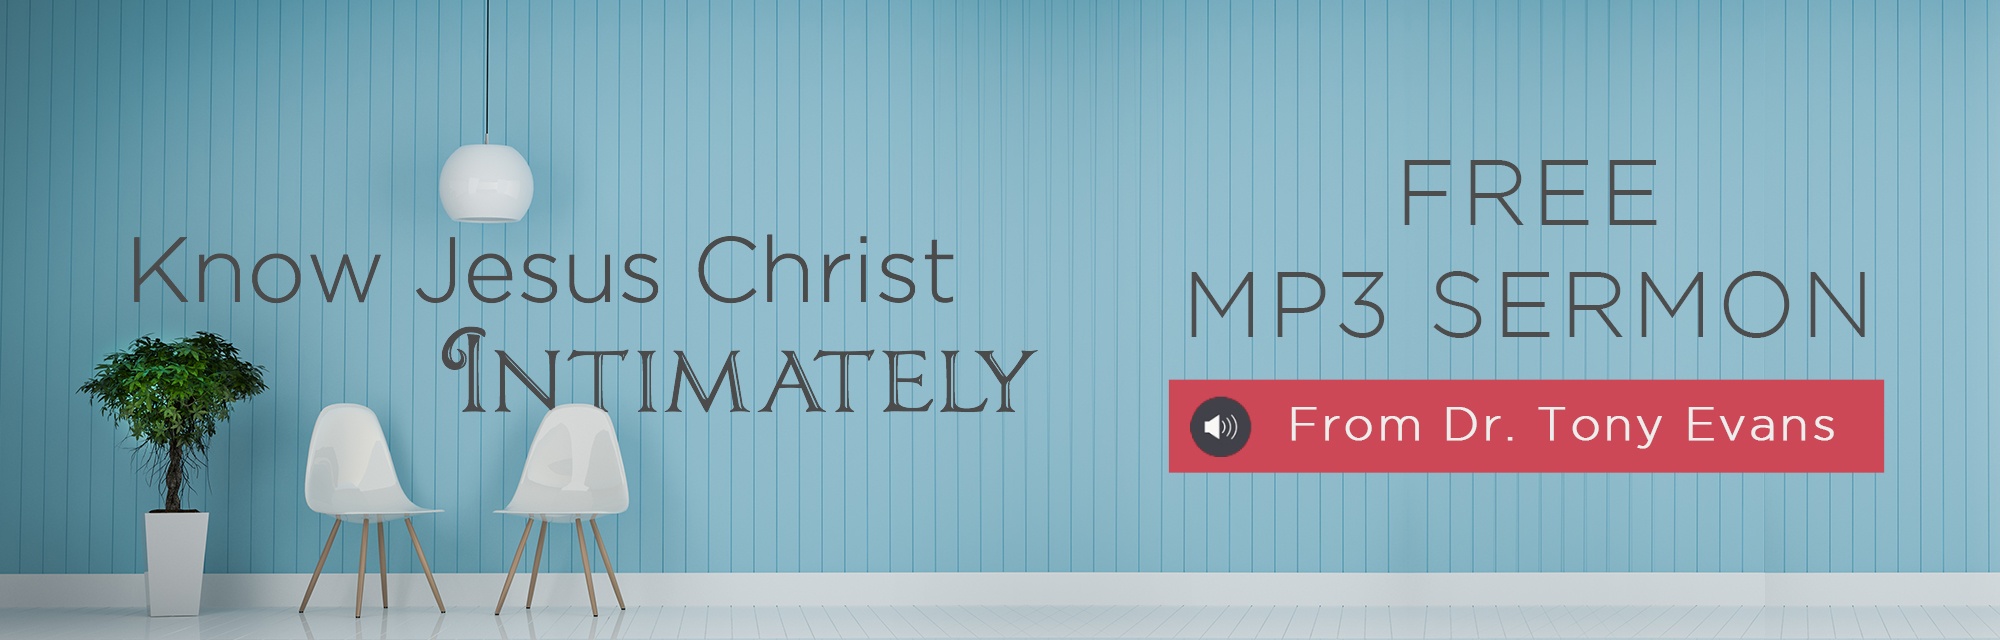 Know Jesus Christ Intimately MP3